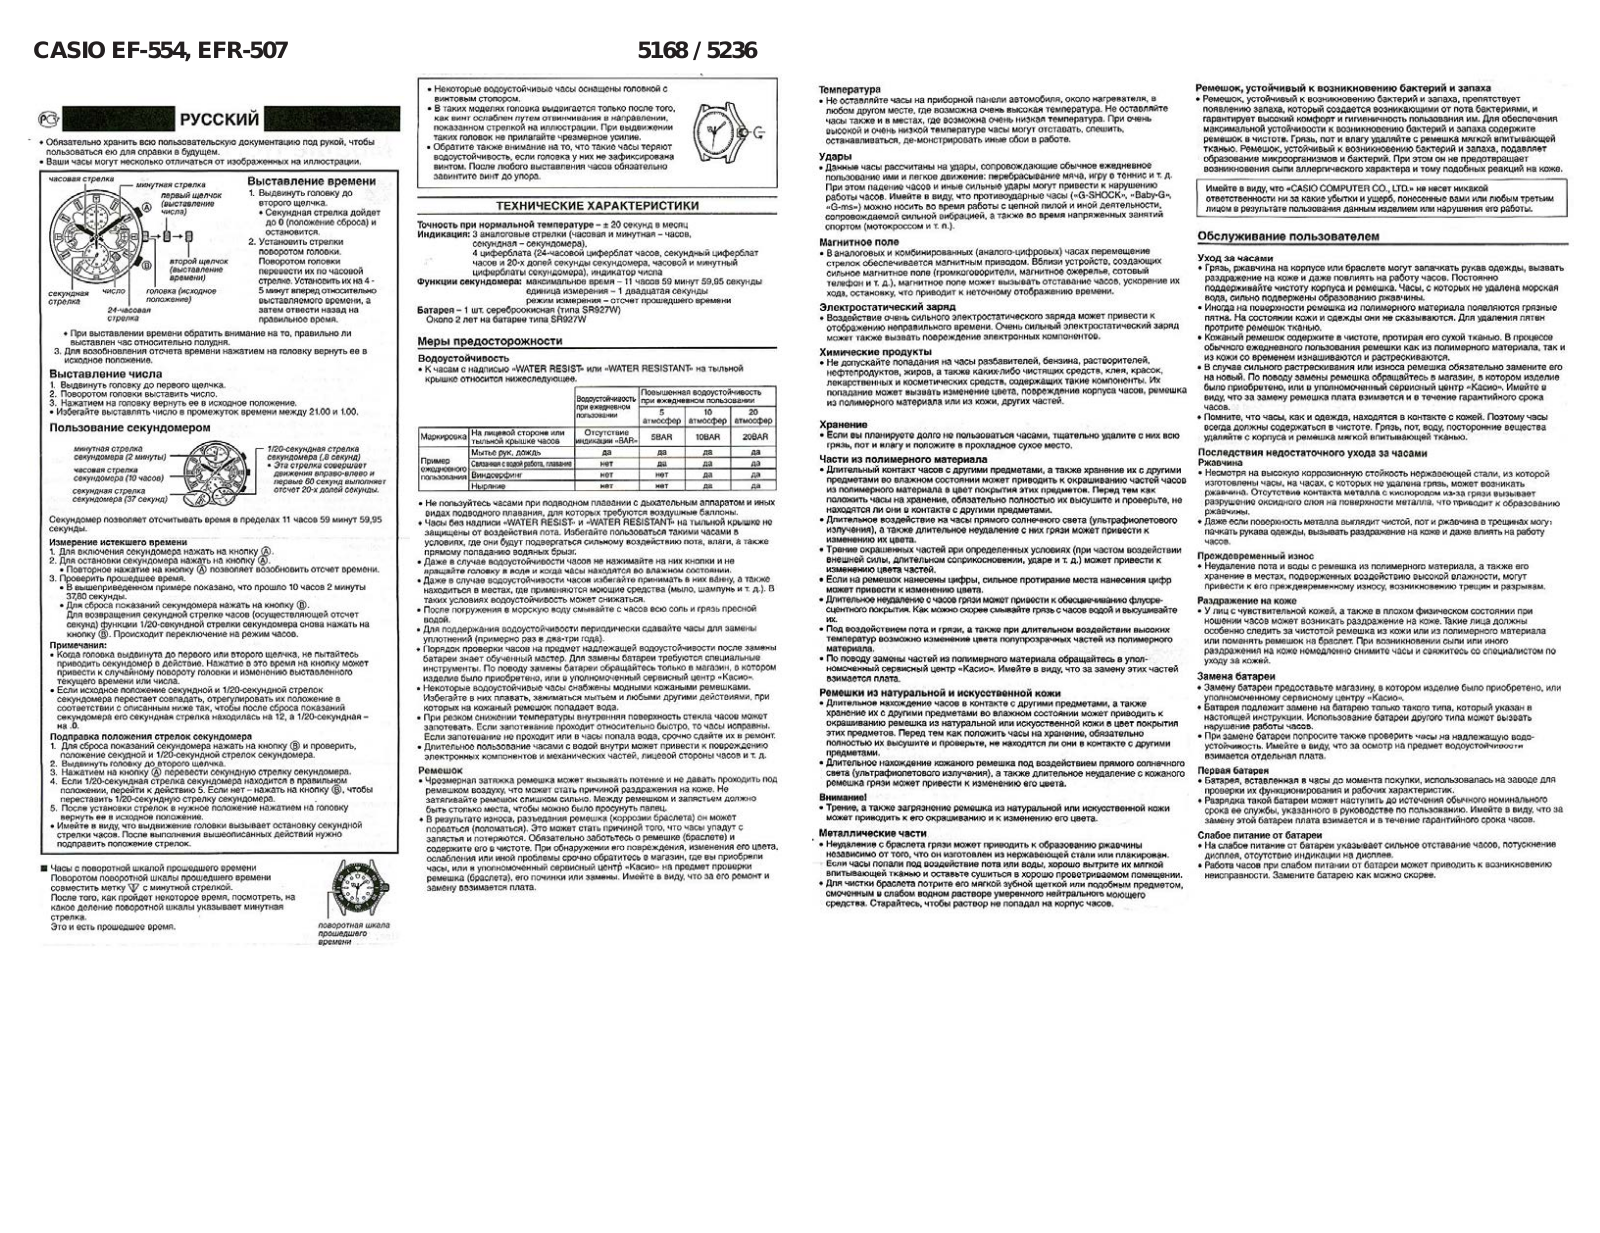 Casio EFR-507D-7A User Manual